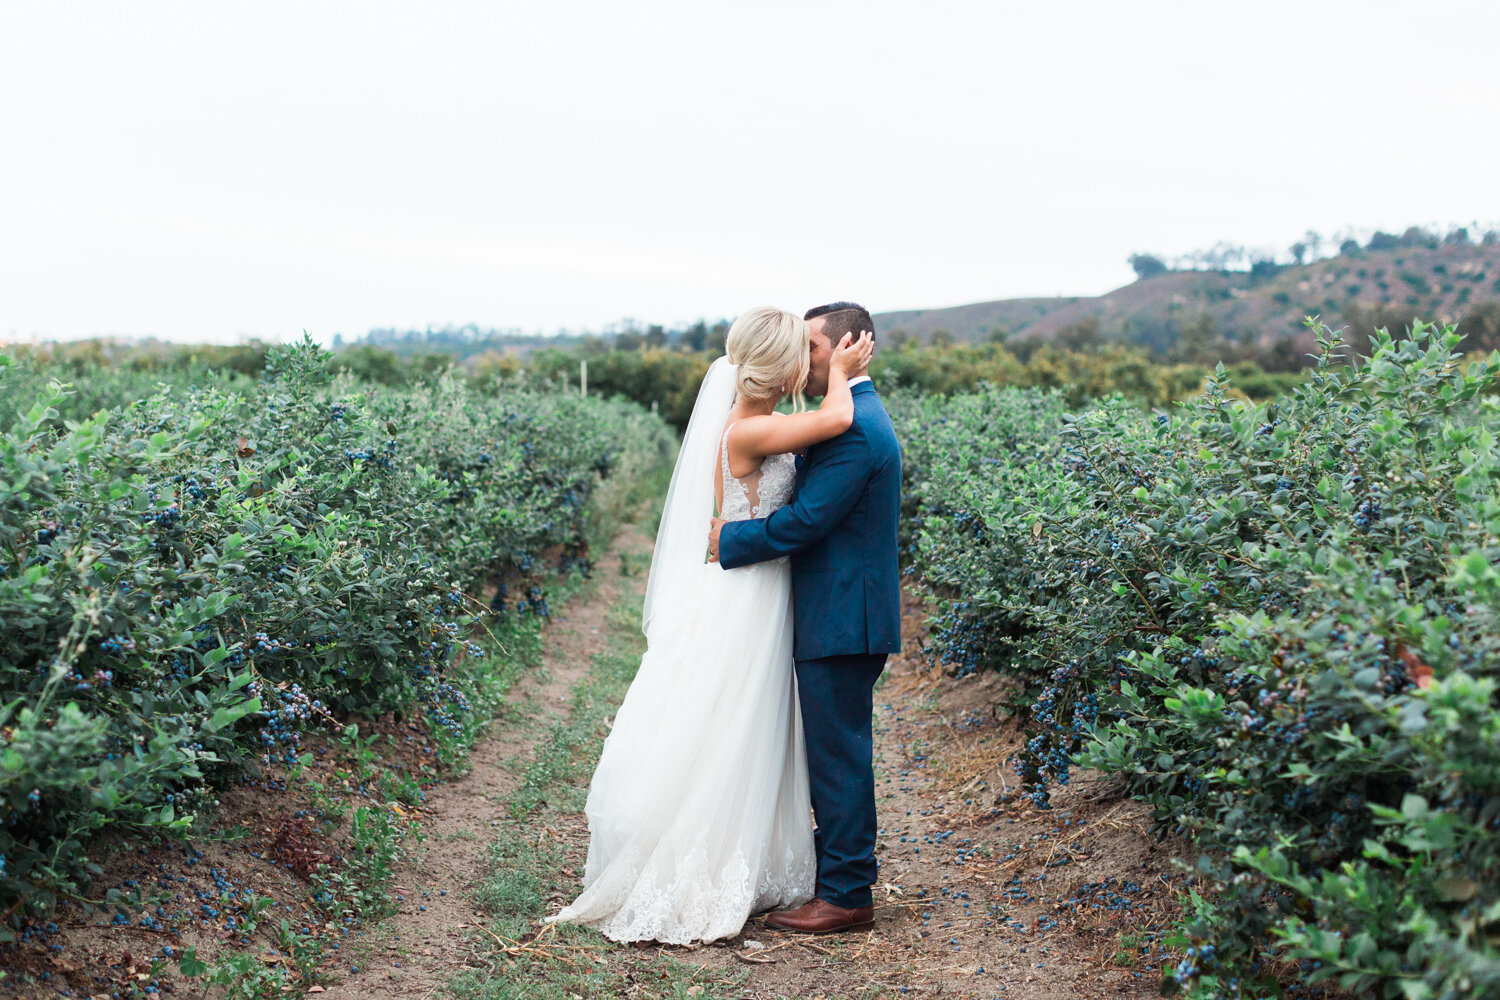 wisteria-photography.com | Wisteria Photography | Gerry Ranch | Weddings Engagement | Southern California Photographer-51.jpg